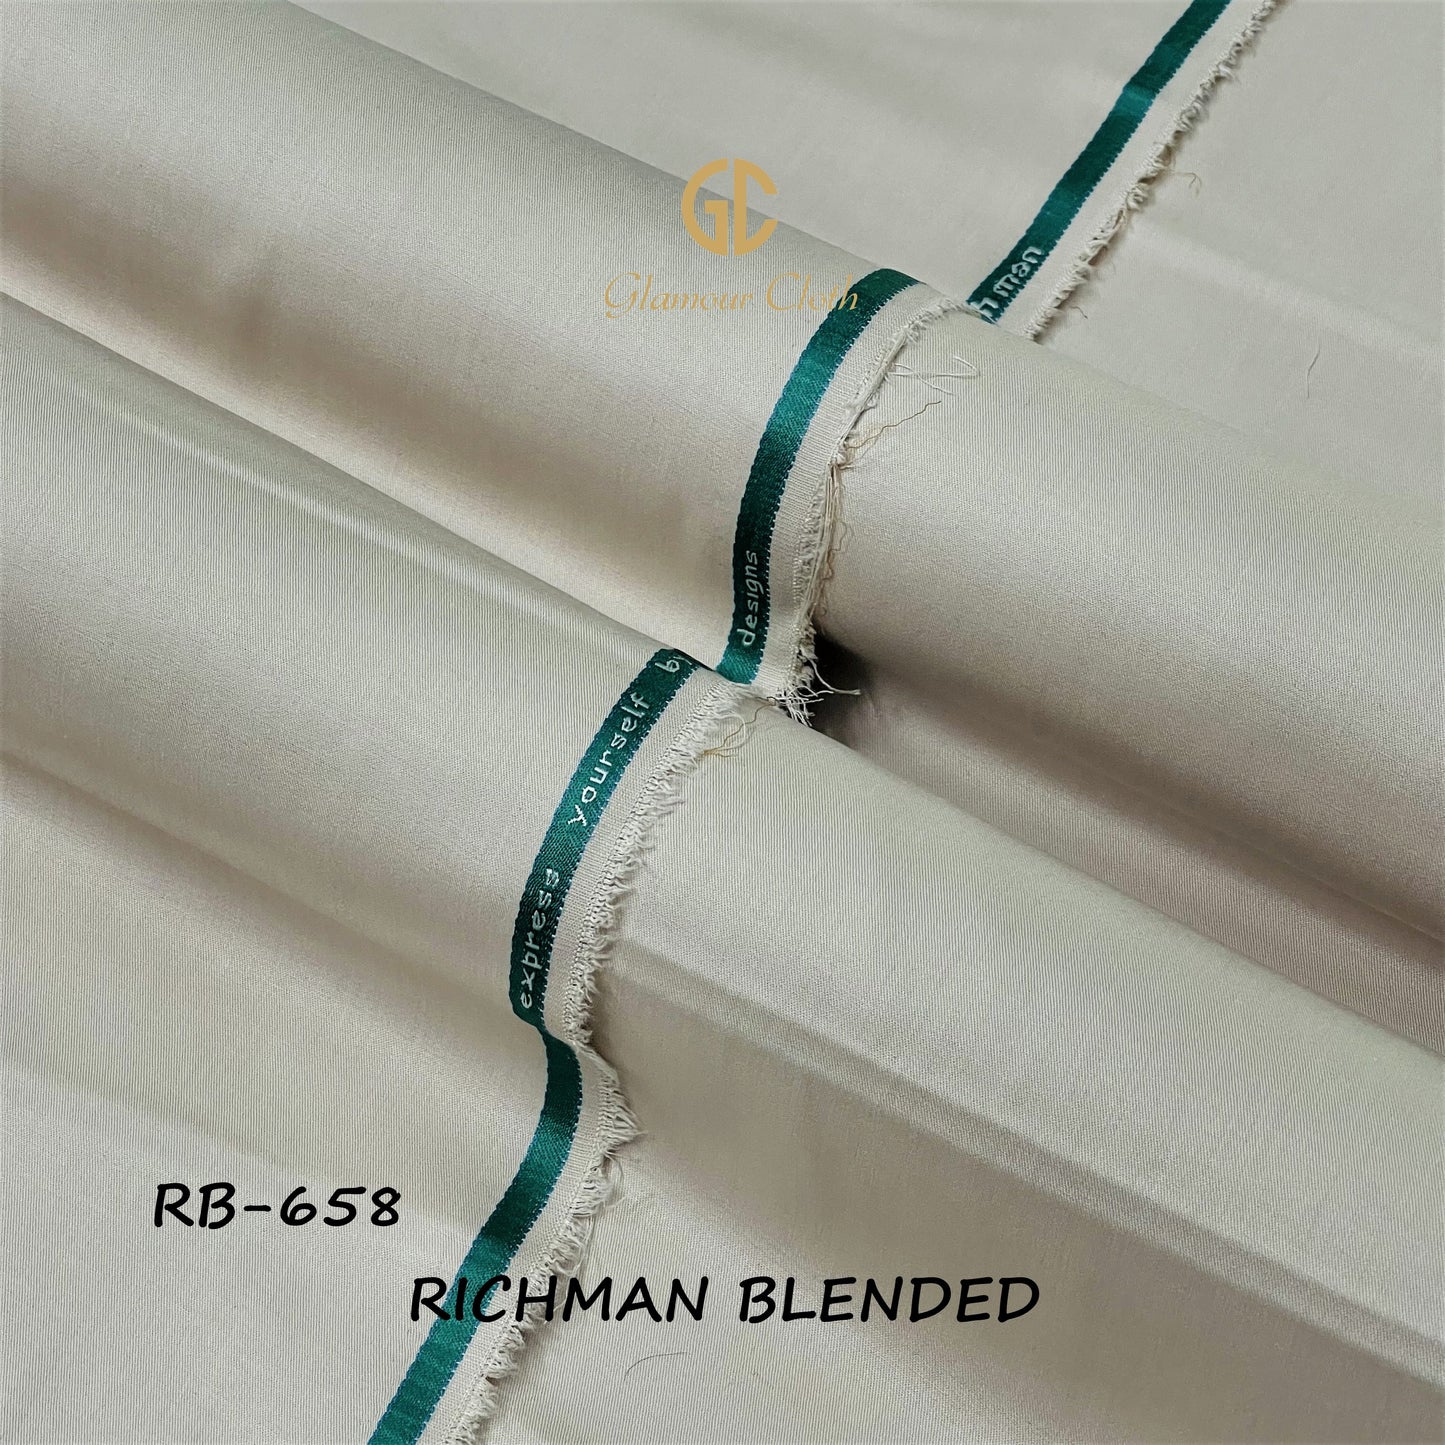 Richman Blended RB-658